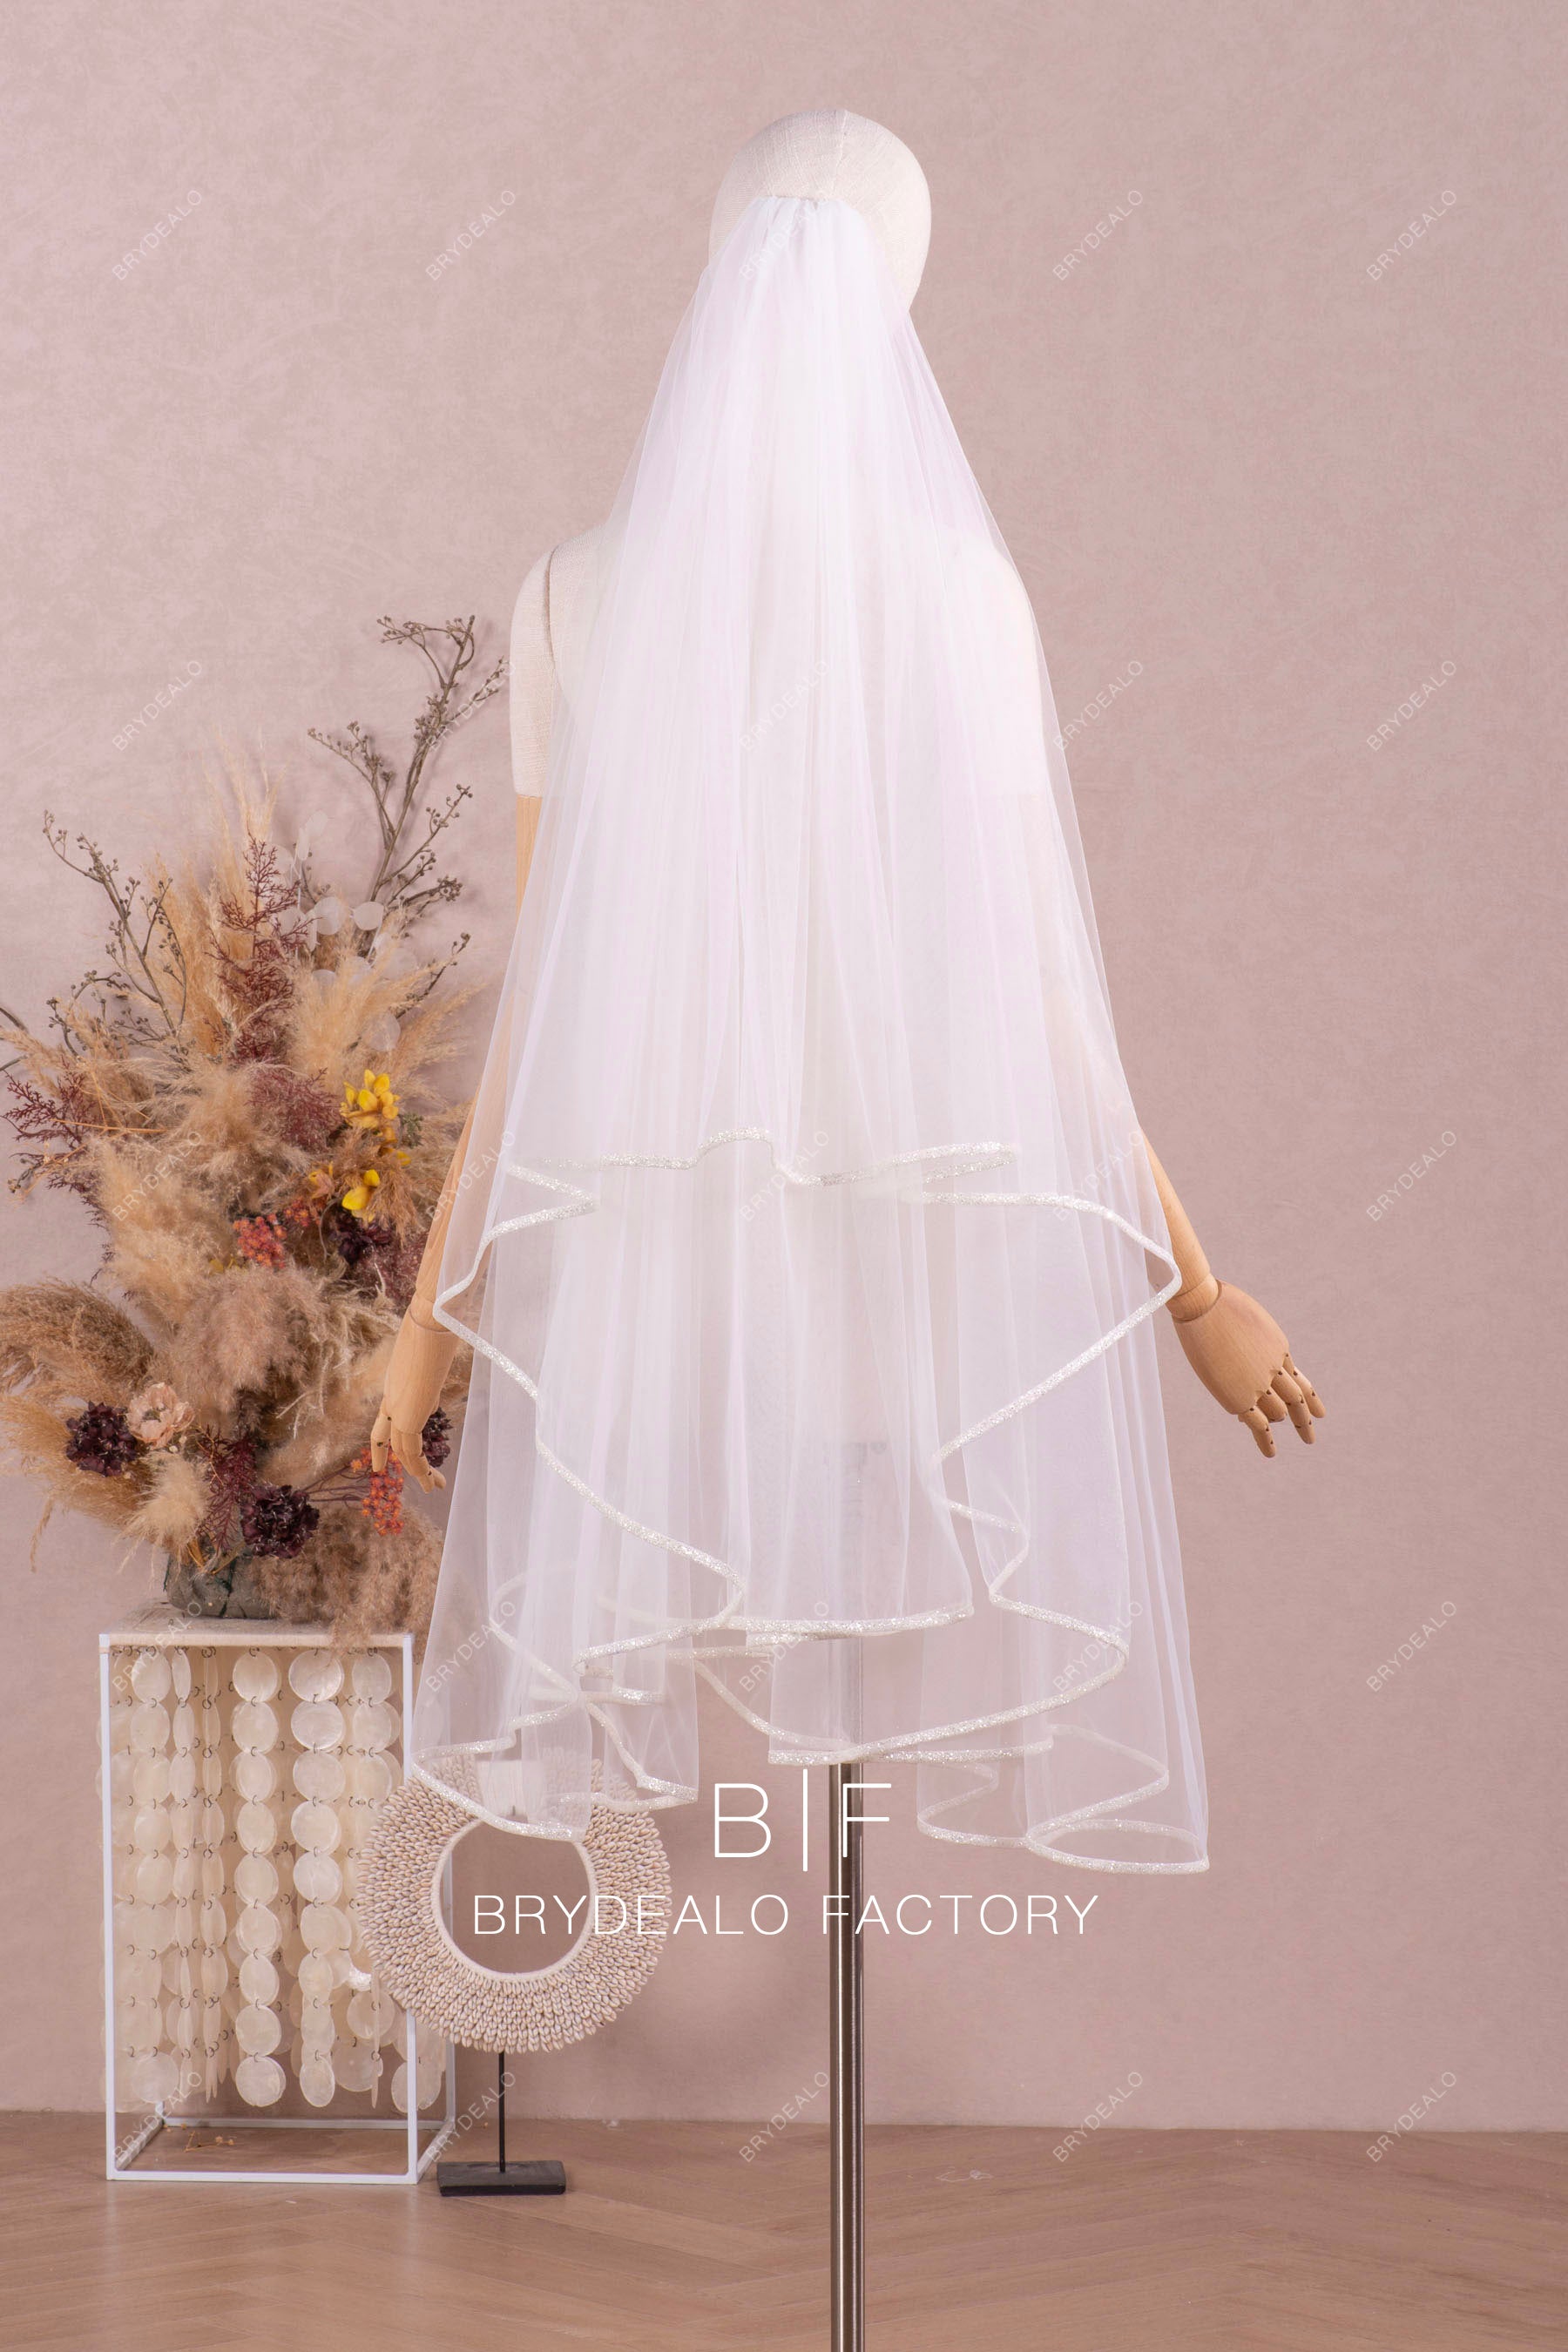 Elegant Bridal Veils Bride Veil Fingertip Length TwoLayer Simple Handmade  Noble Tulle Ribbon Edge Wedding Veil Headwear Comb3810655 From Hxiy, $14.88